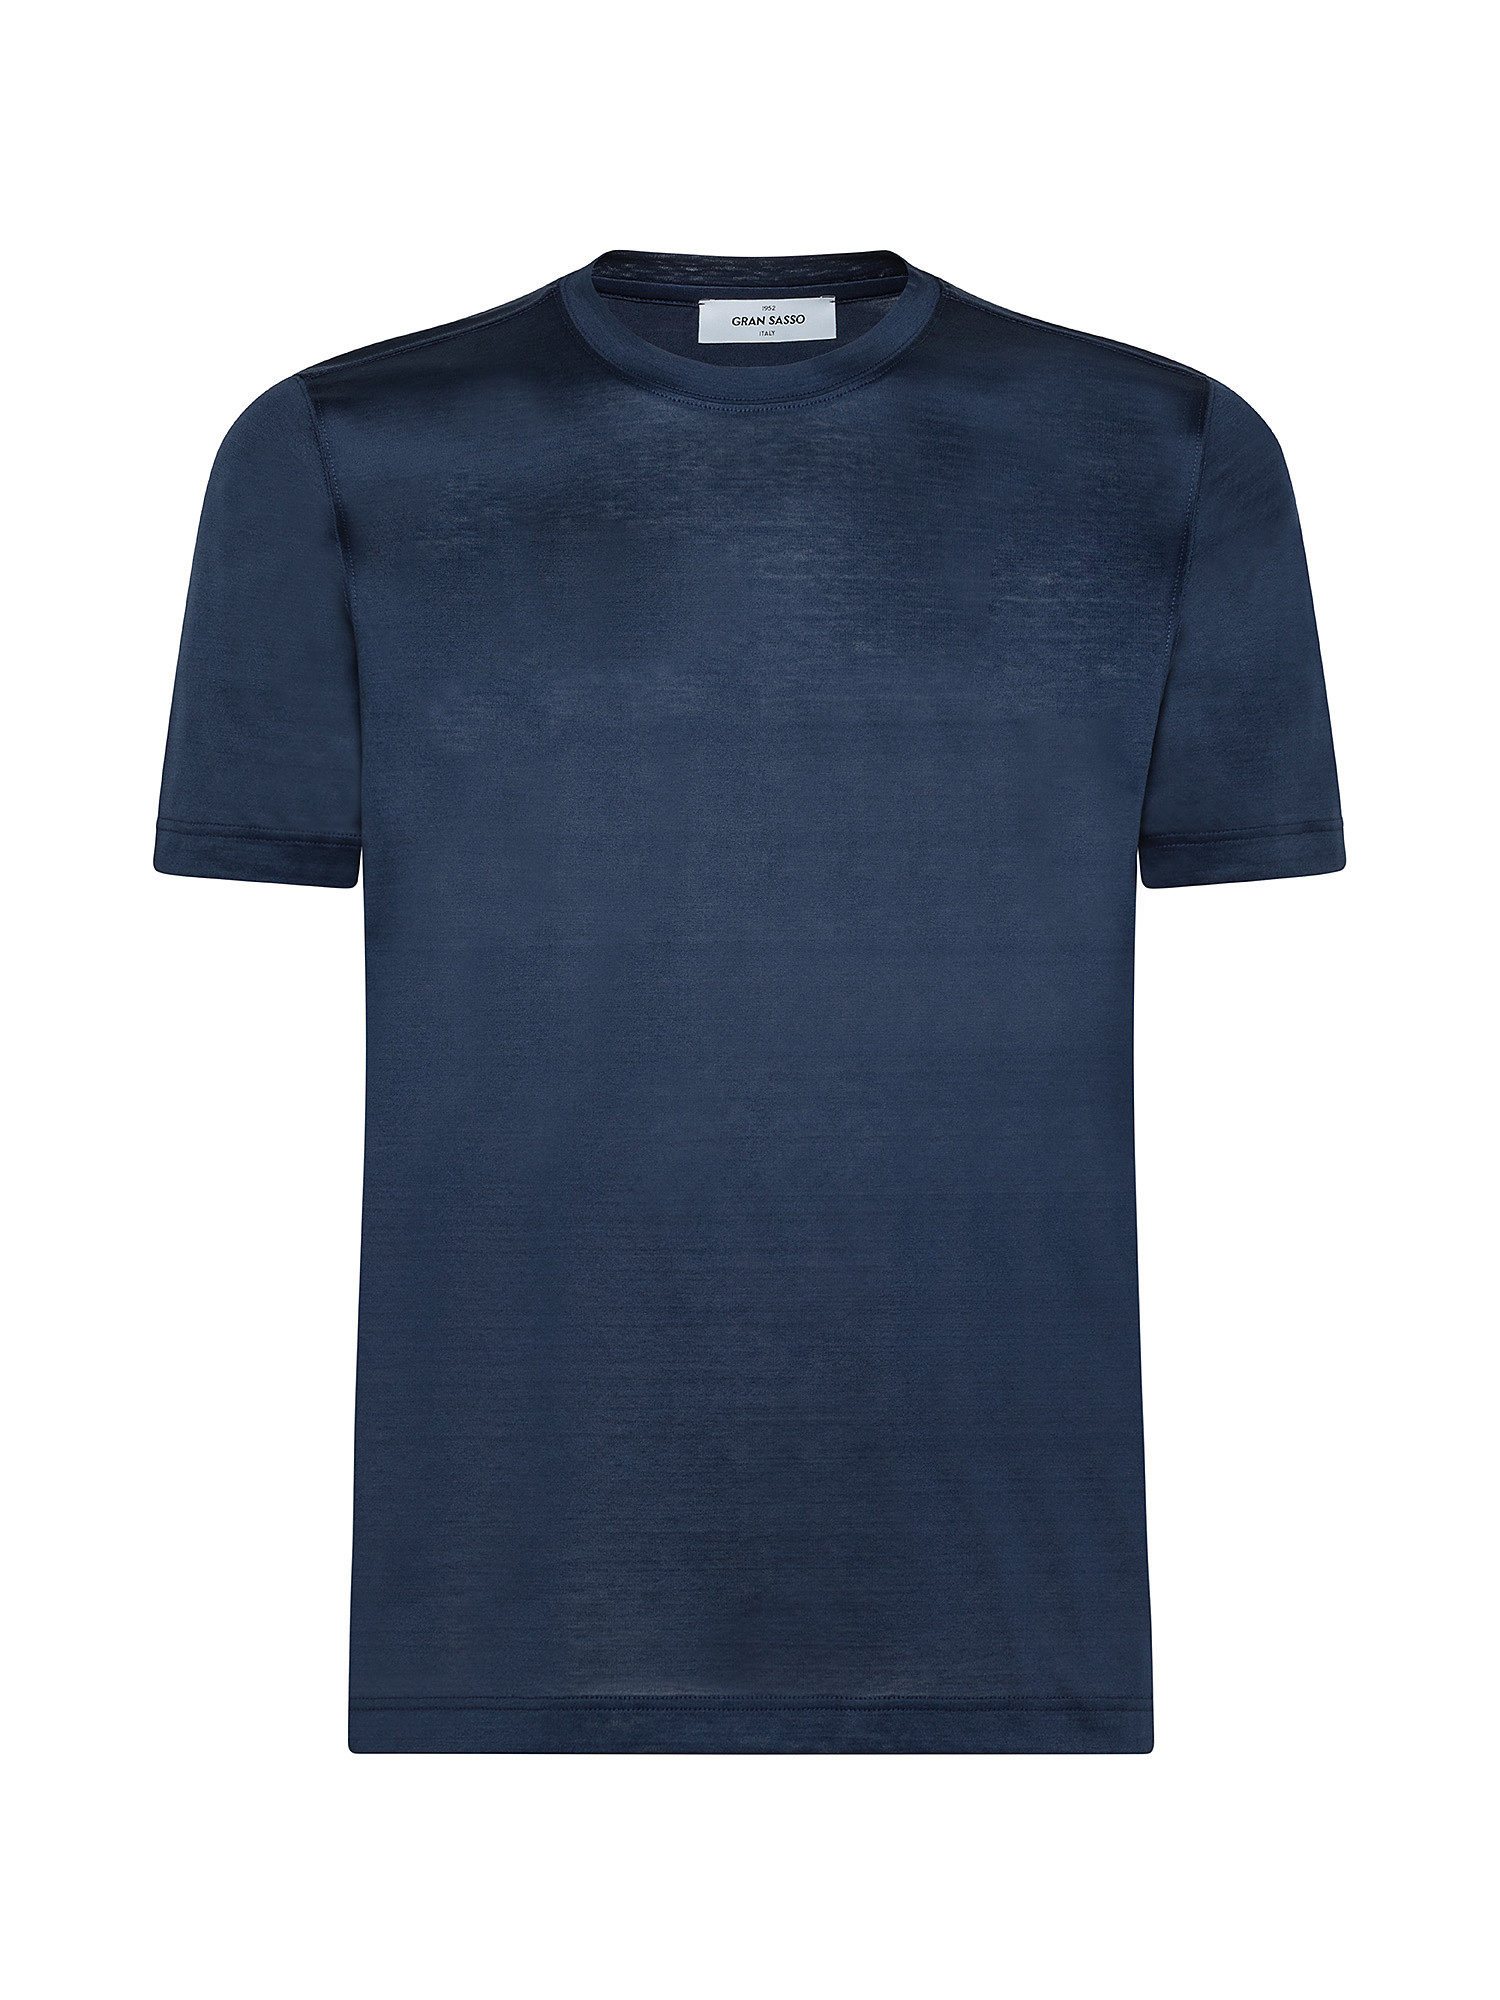 T-shirt girocollo manica corta, Blu, large image number 0